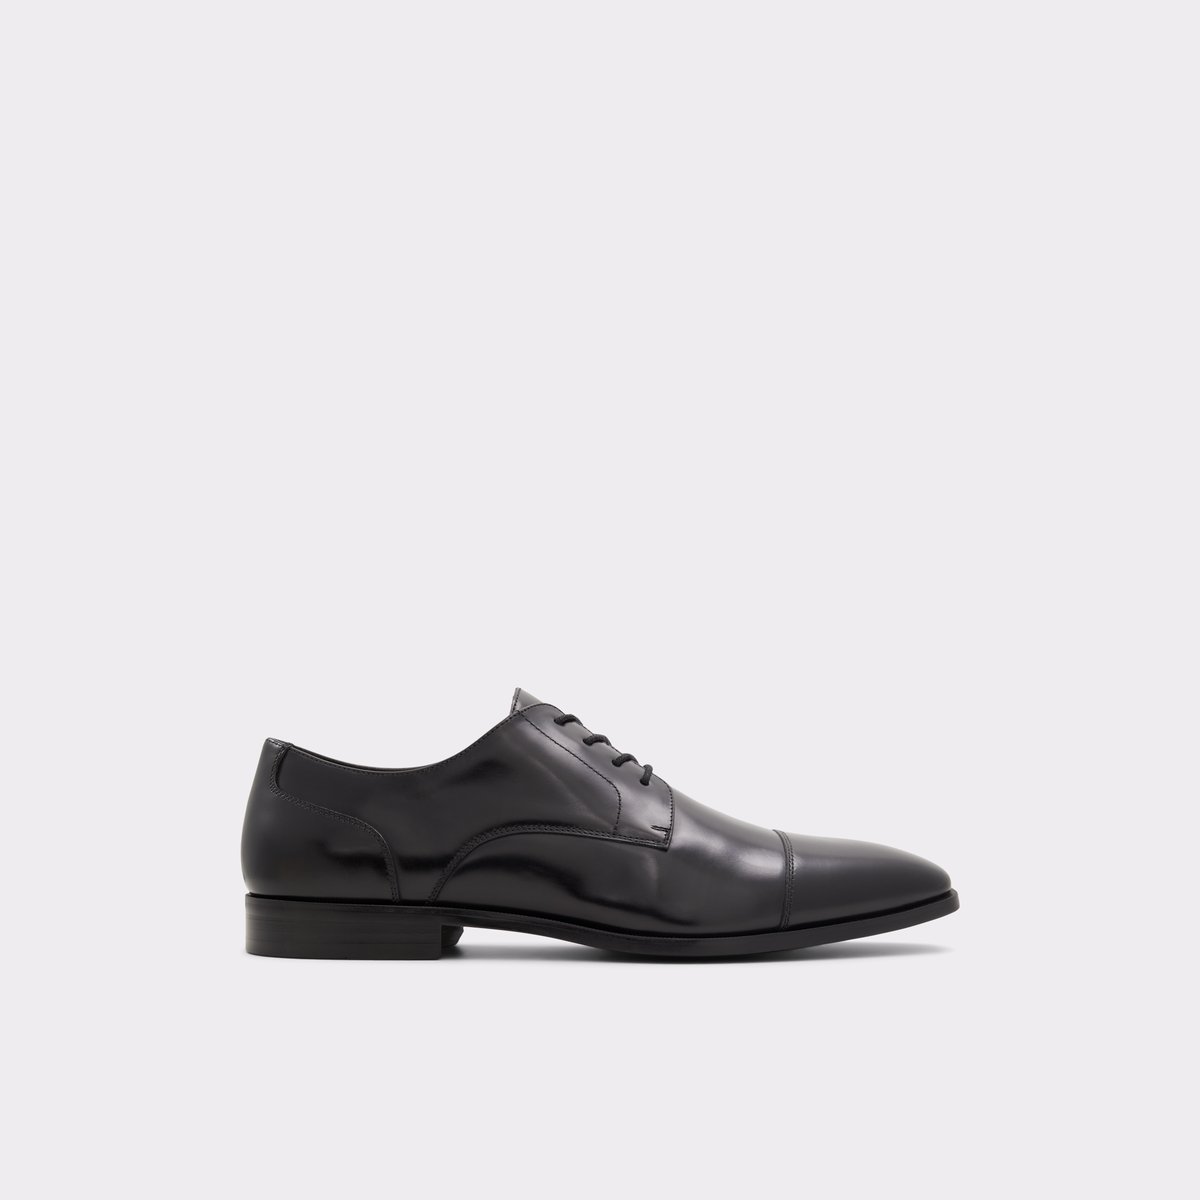 Callahan Black Leather Shiny Men's Dress Shoes | ALDO Canada